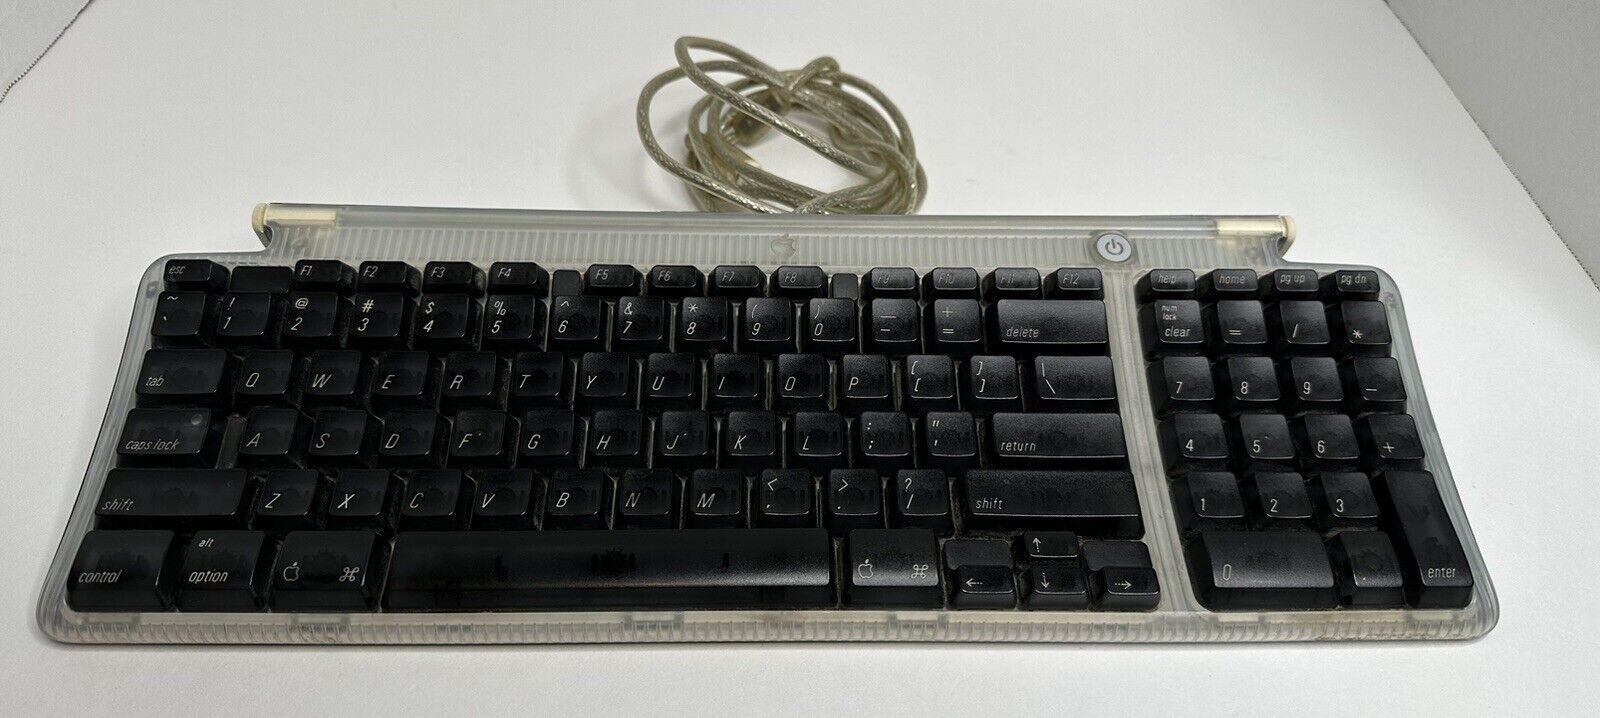 Apple M2452 Vintage Teal/Graphite USB Keyboard for G3 / G4 Macintosh 1999